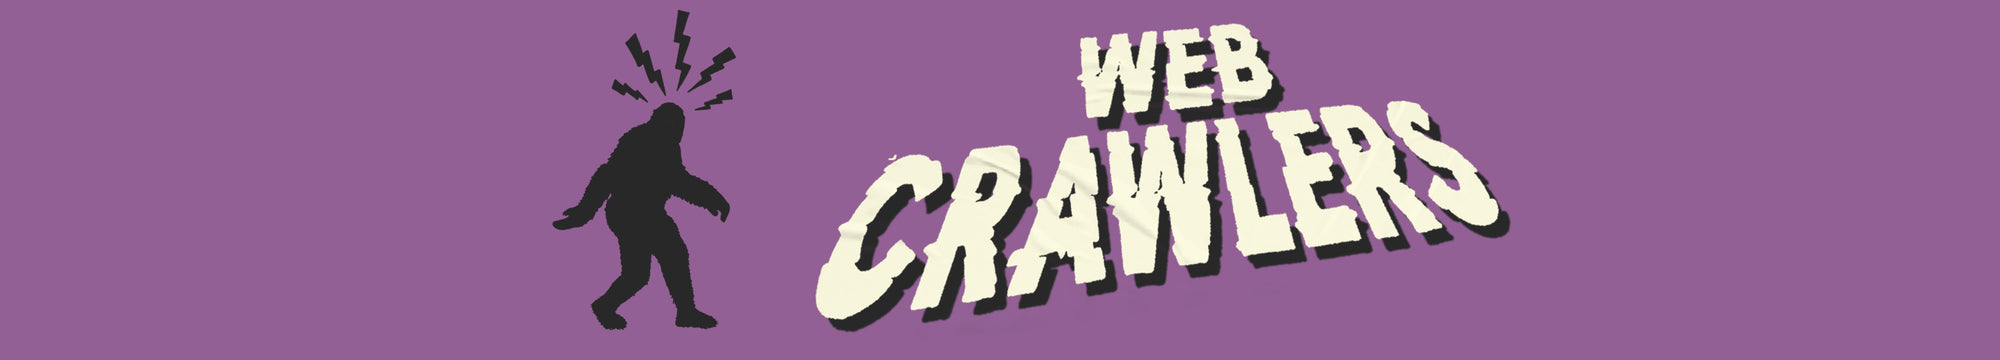 Web Crawlers Podcast